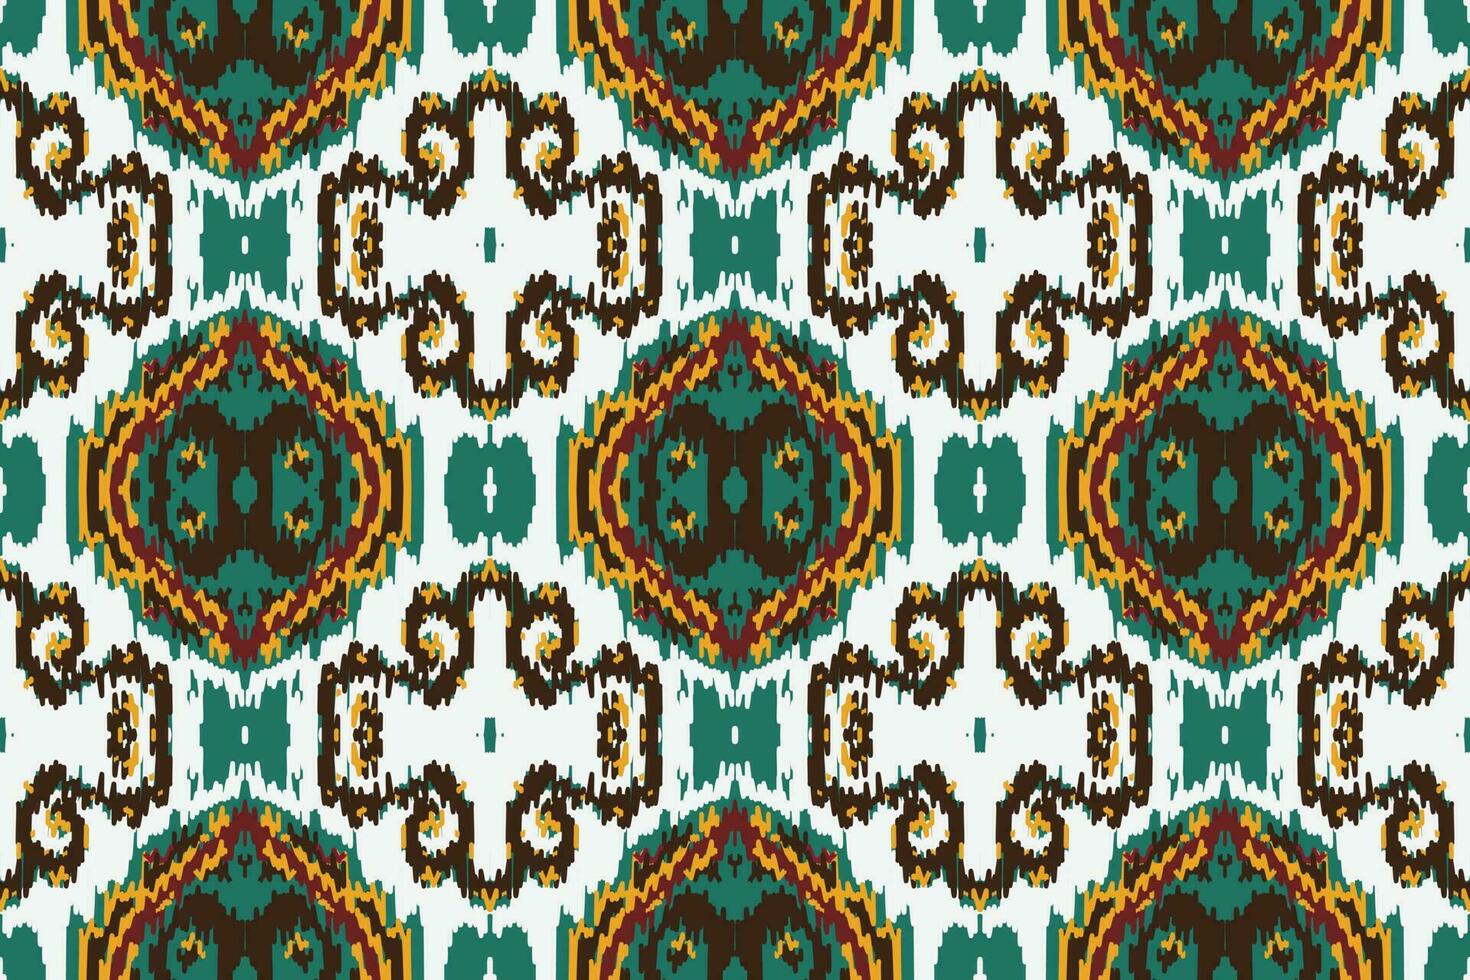 africano ikat damasco paisley bordado fundo. geométrico étnico oriental padronizar tradicional. ikat asteca estilo abstrato vetor ilustração. Projeto para impressão textura, tecido, saree, sari, tapete.